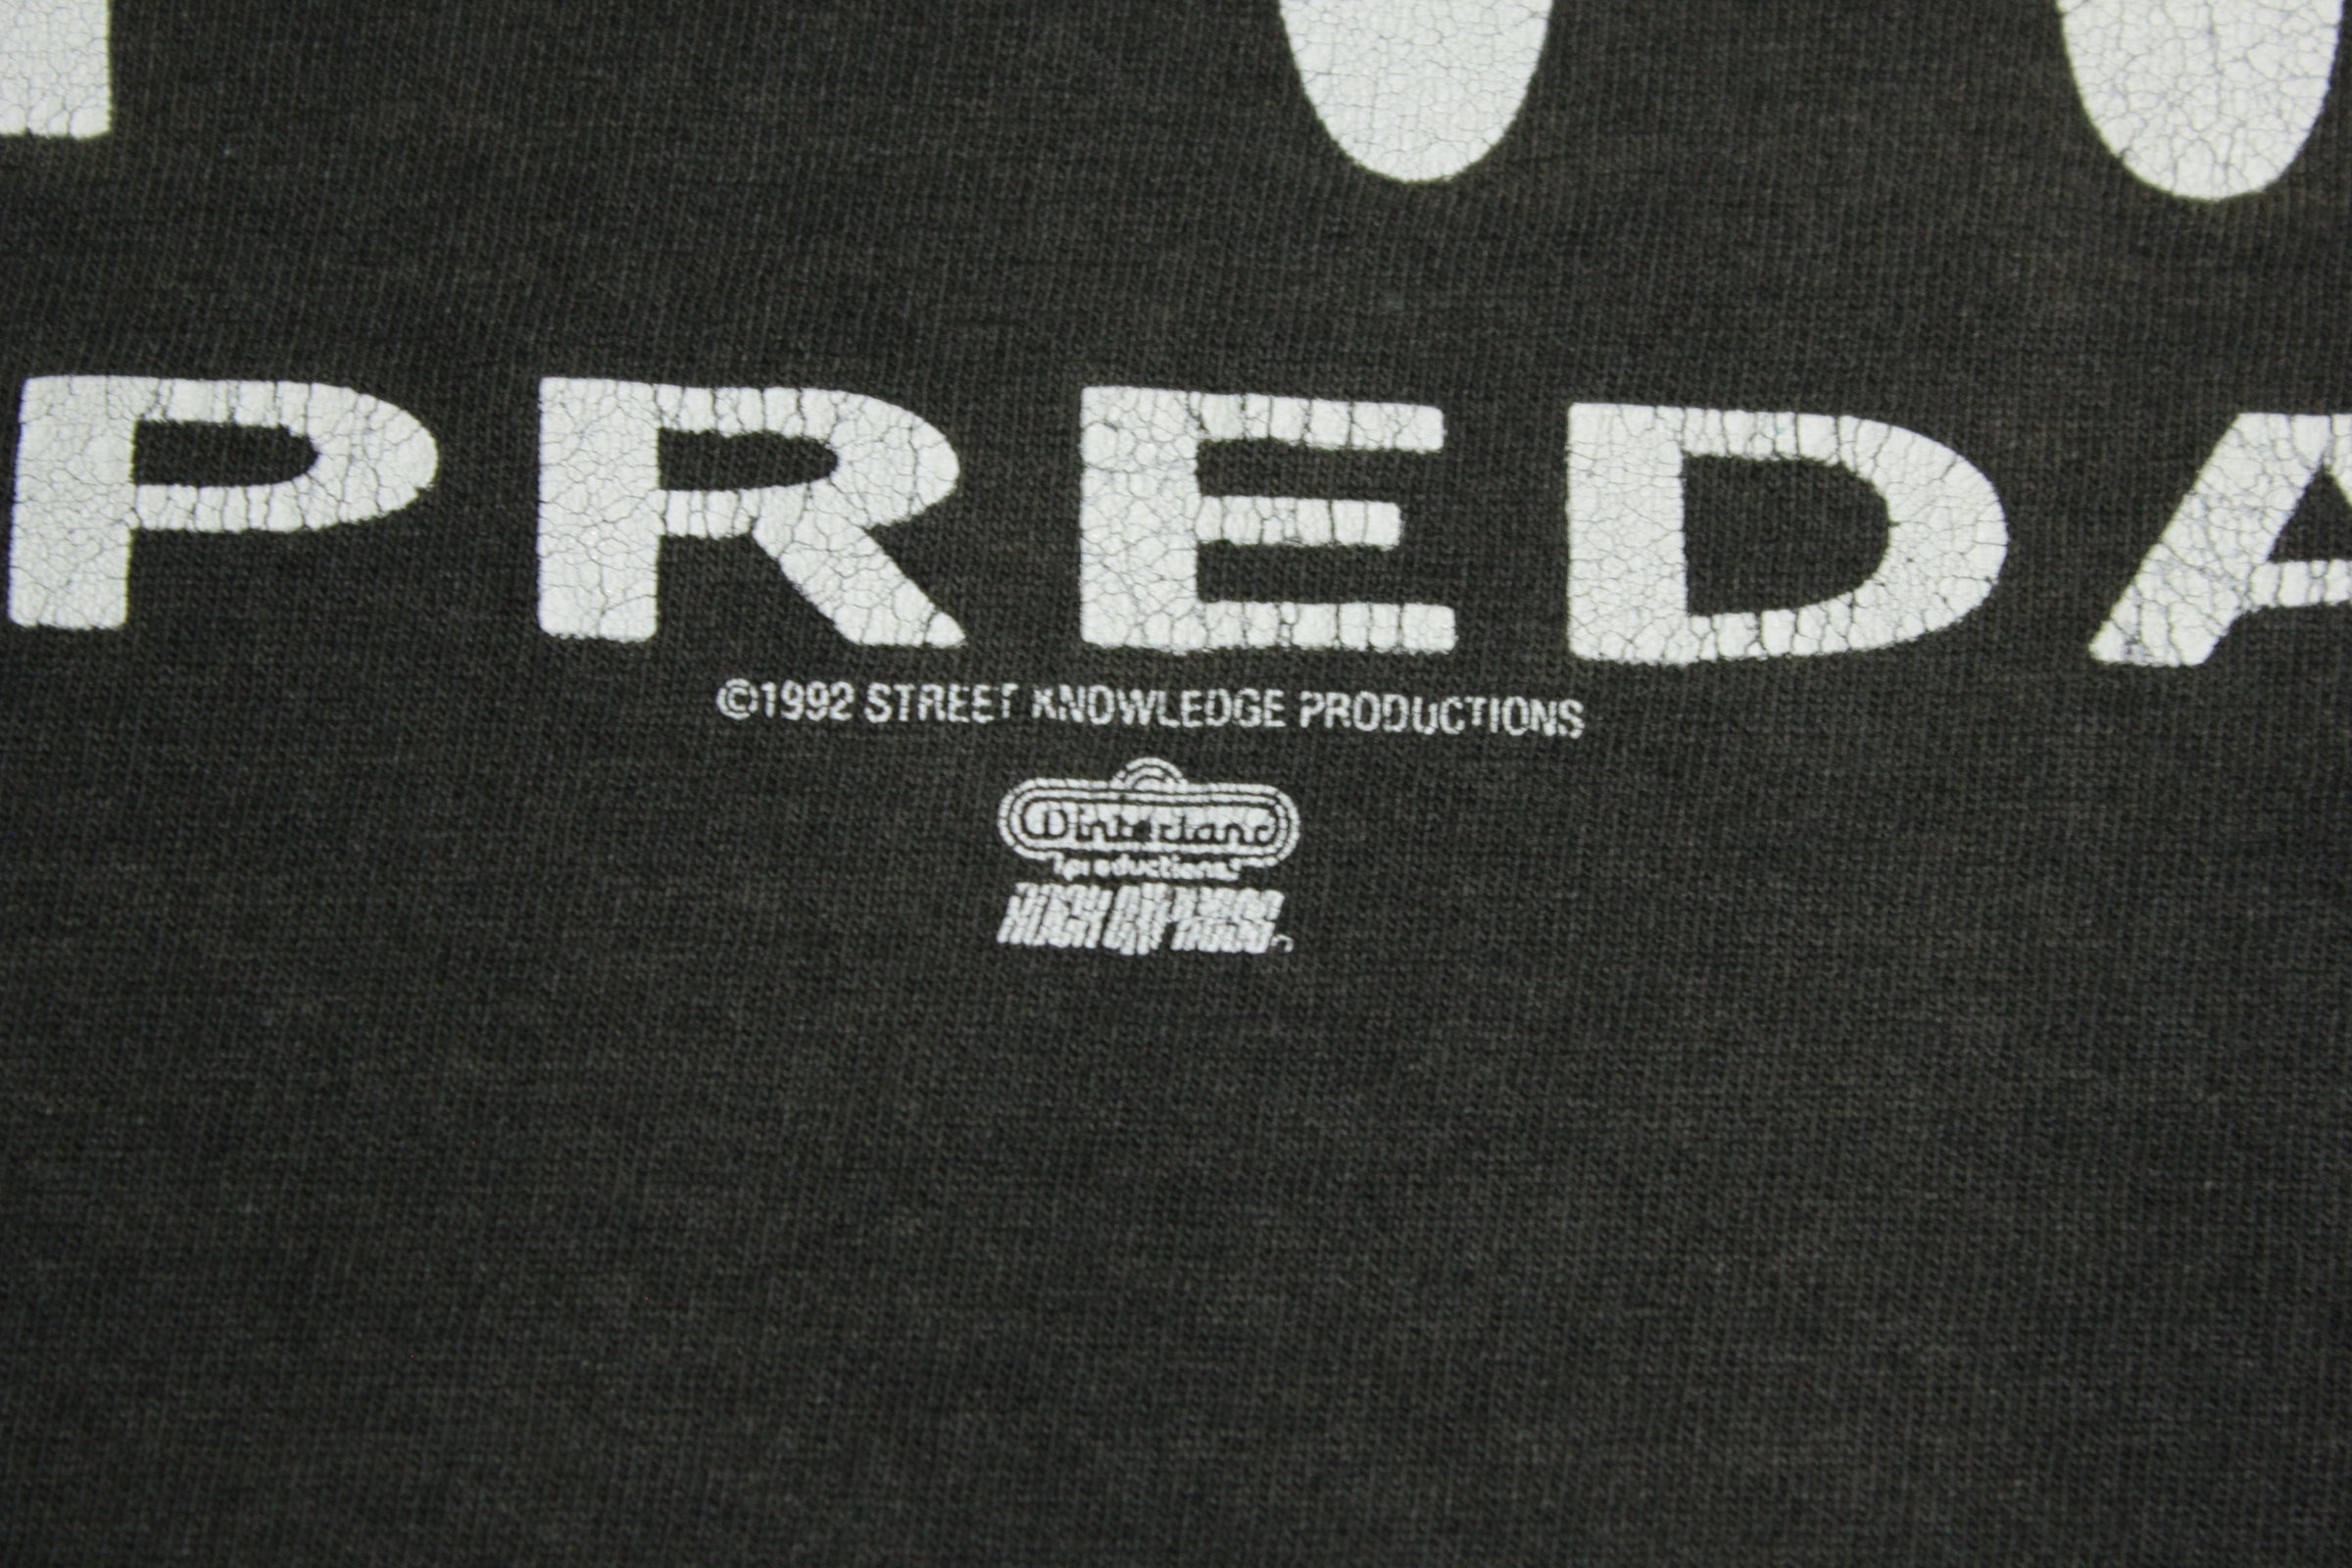 Vintage Ice Cube The Predator T-Shirt